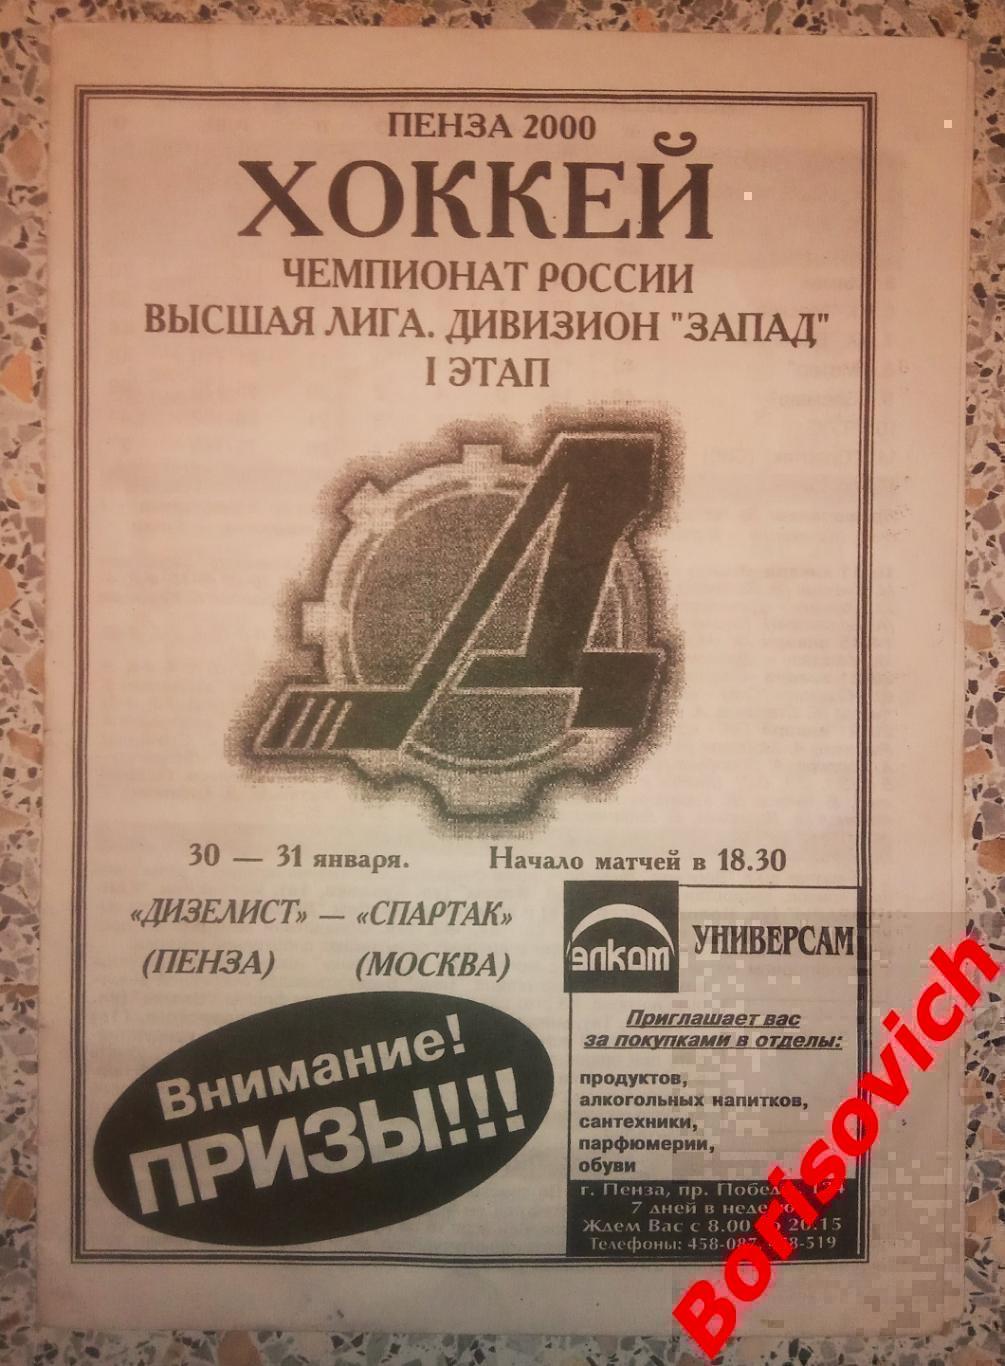 Дизелист Пенза - Спартак Москва 30,31-01-2001 ОБМЕН